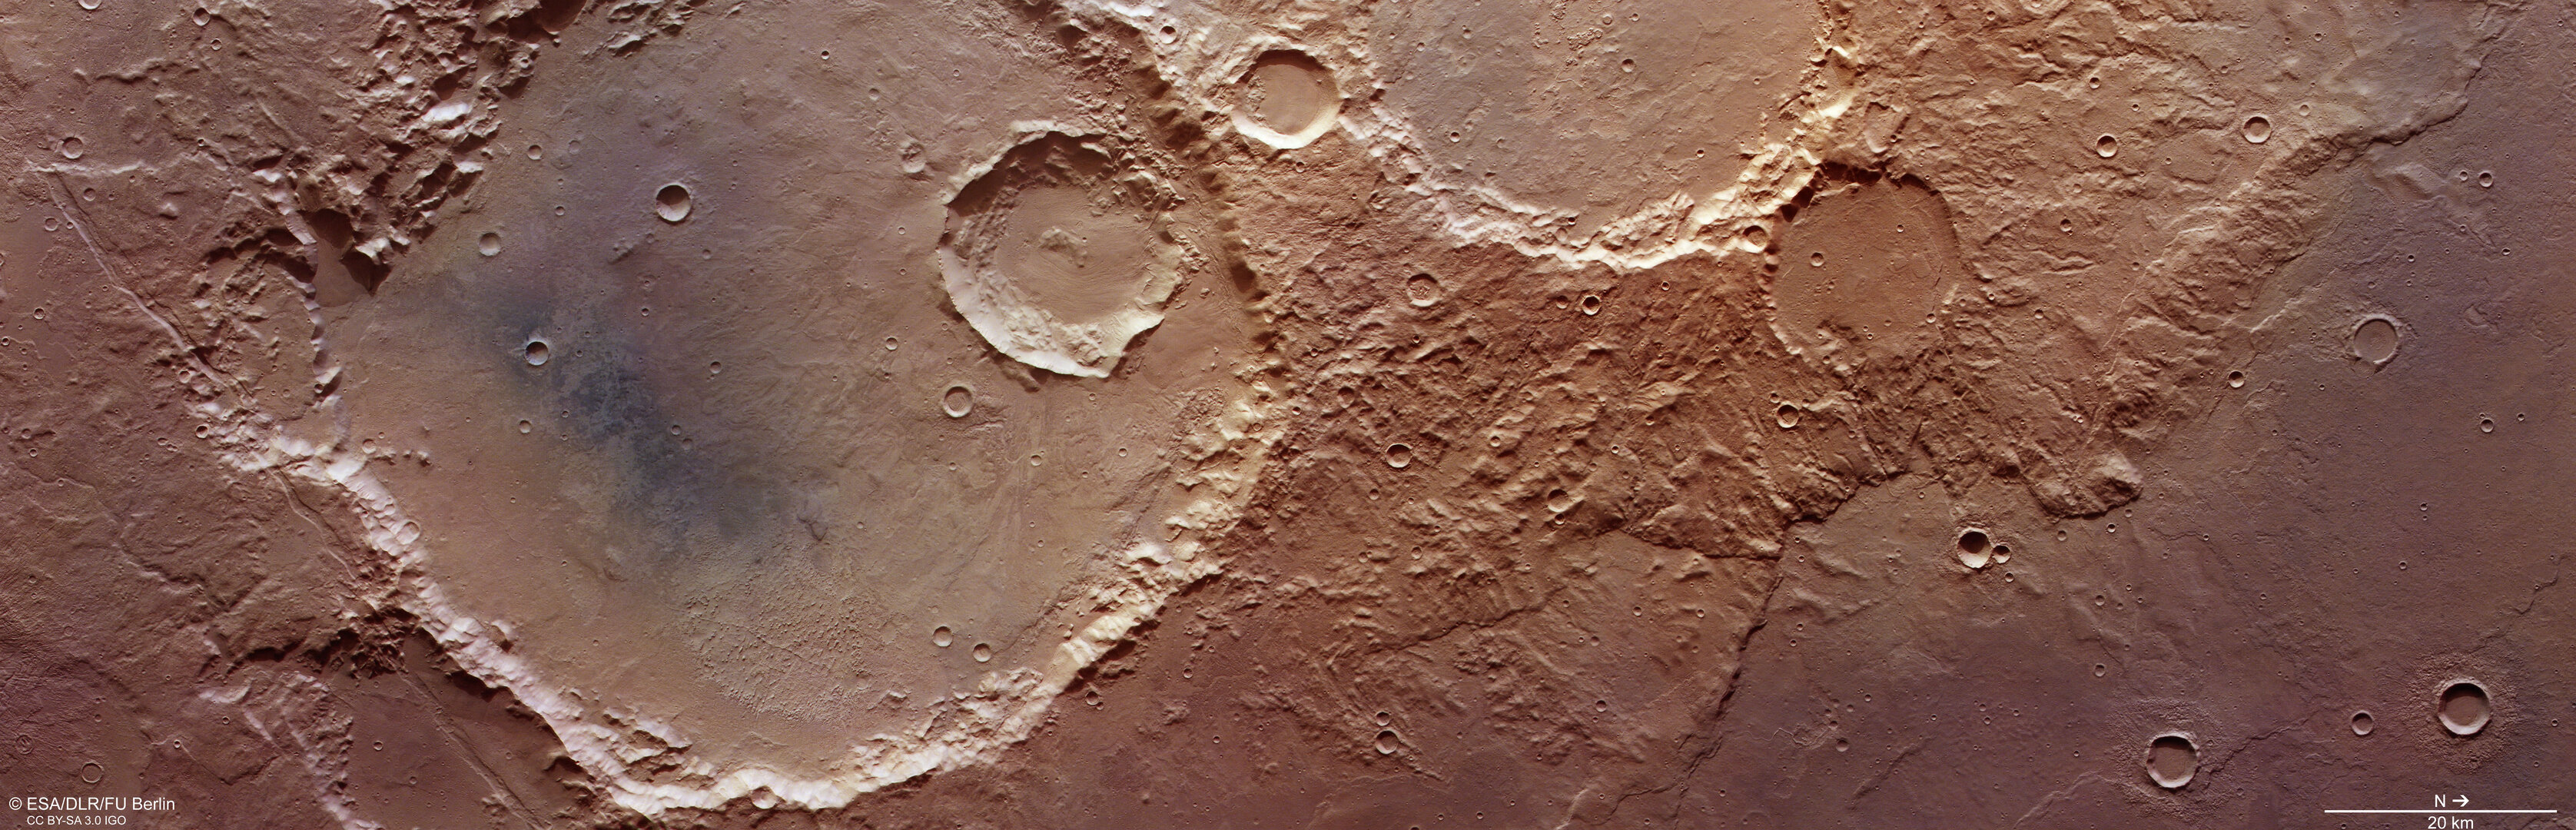 Terra Sirenum, Mars